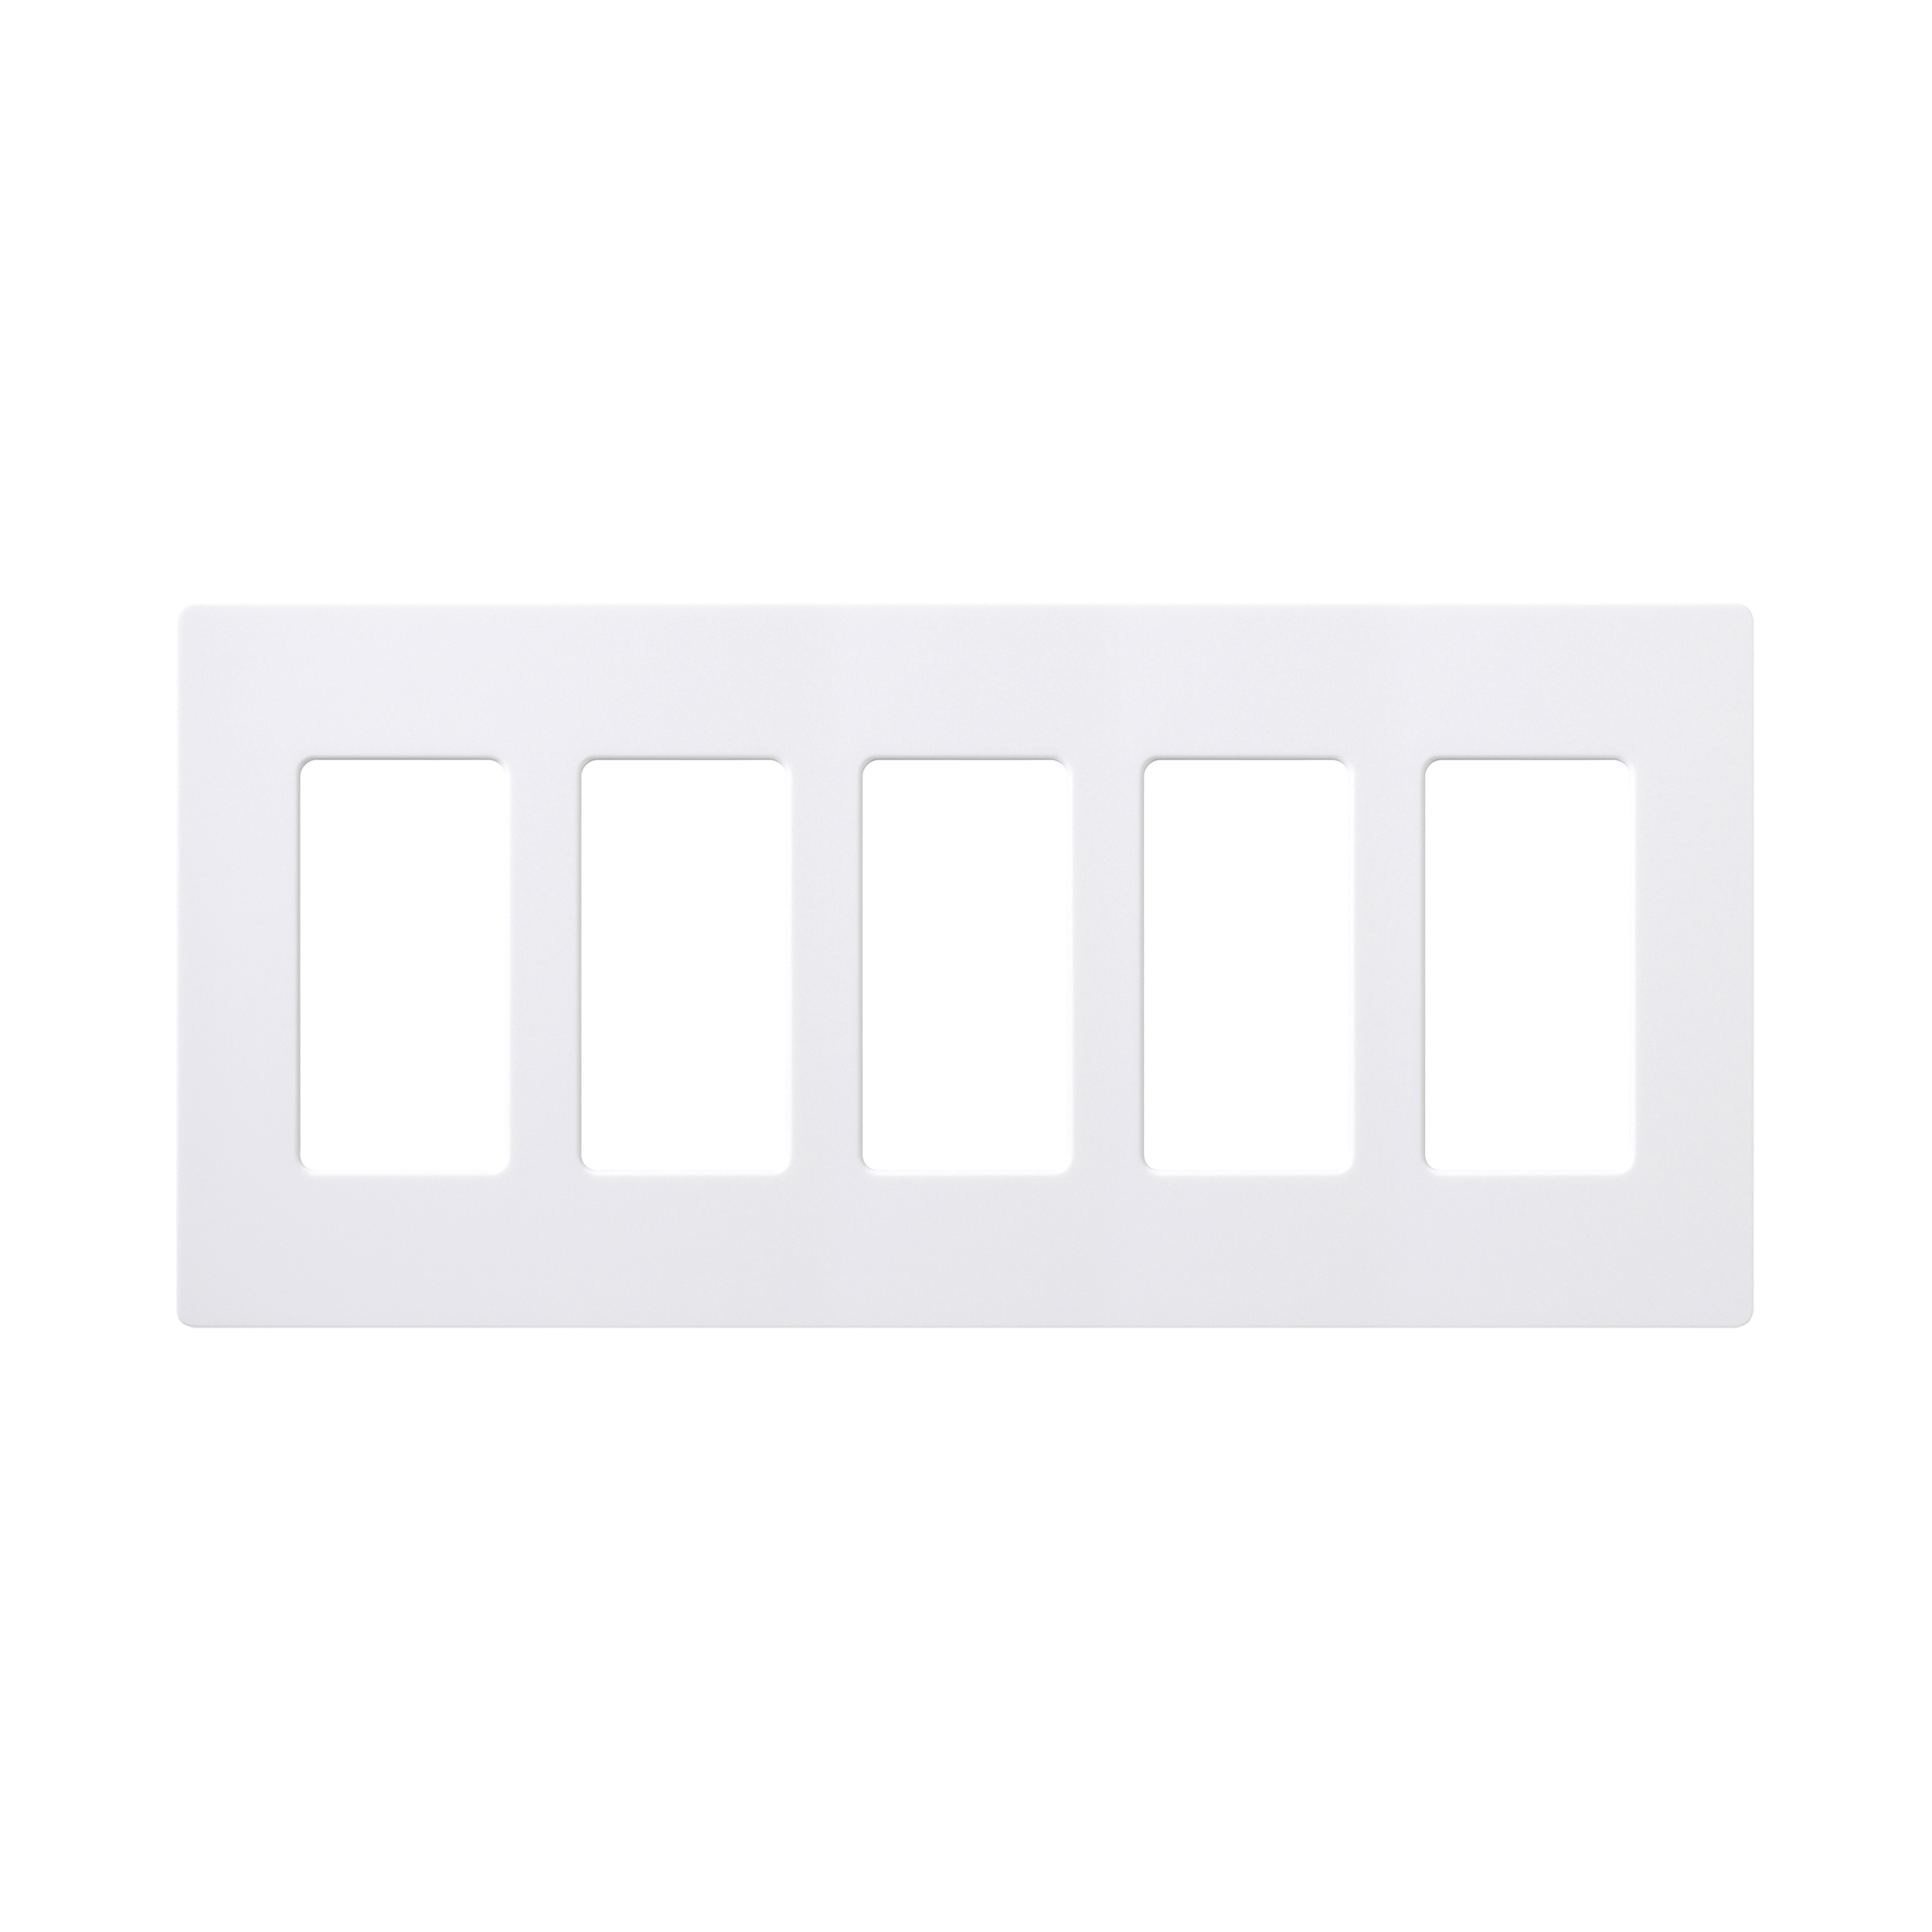 Placa de pared 5 espacios, para atenuador (dimmer), switch ó control remoto PICO inalámbrico